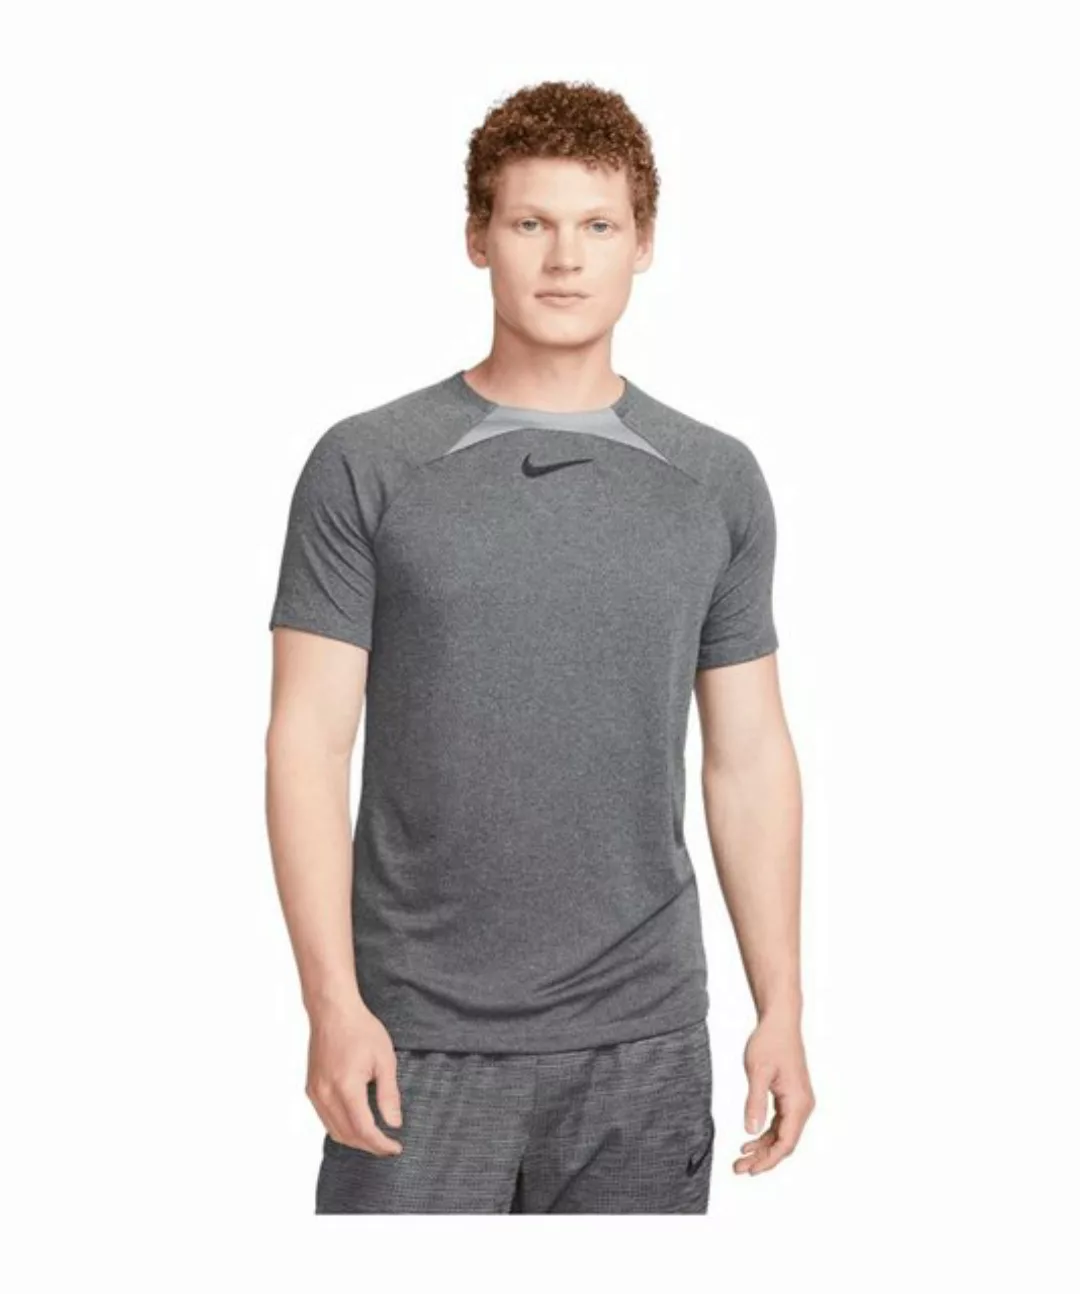 Nike T-Shirt Adacemy T-Shirt default günstig online kaufen